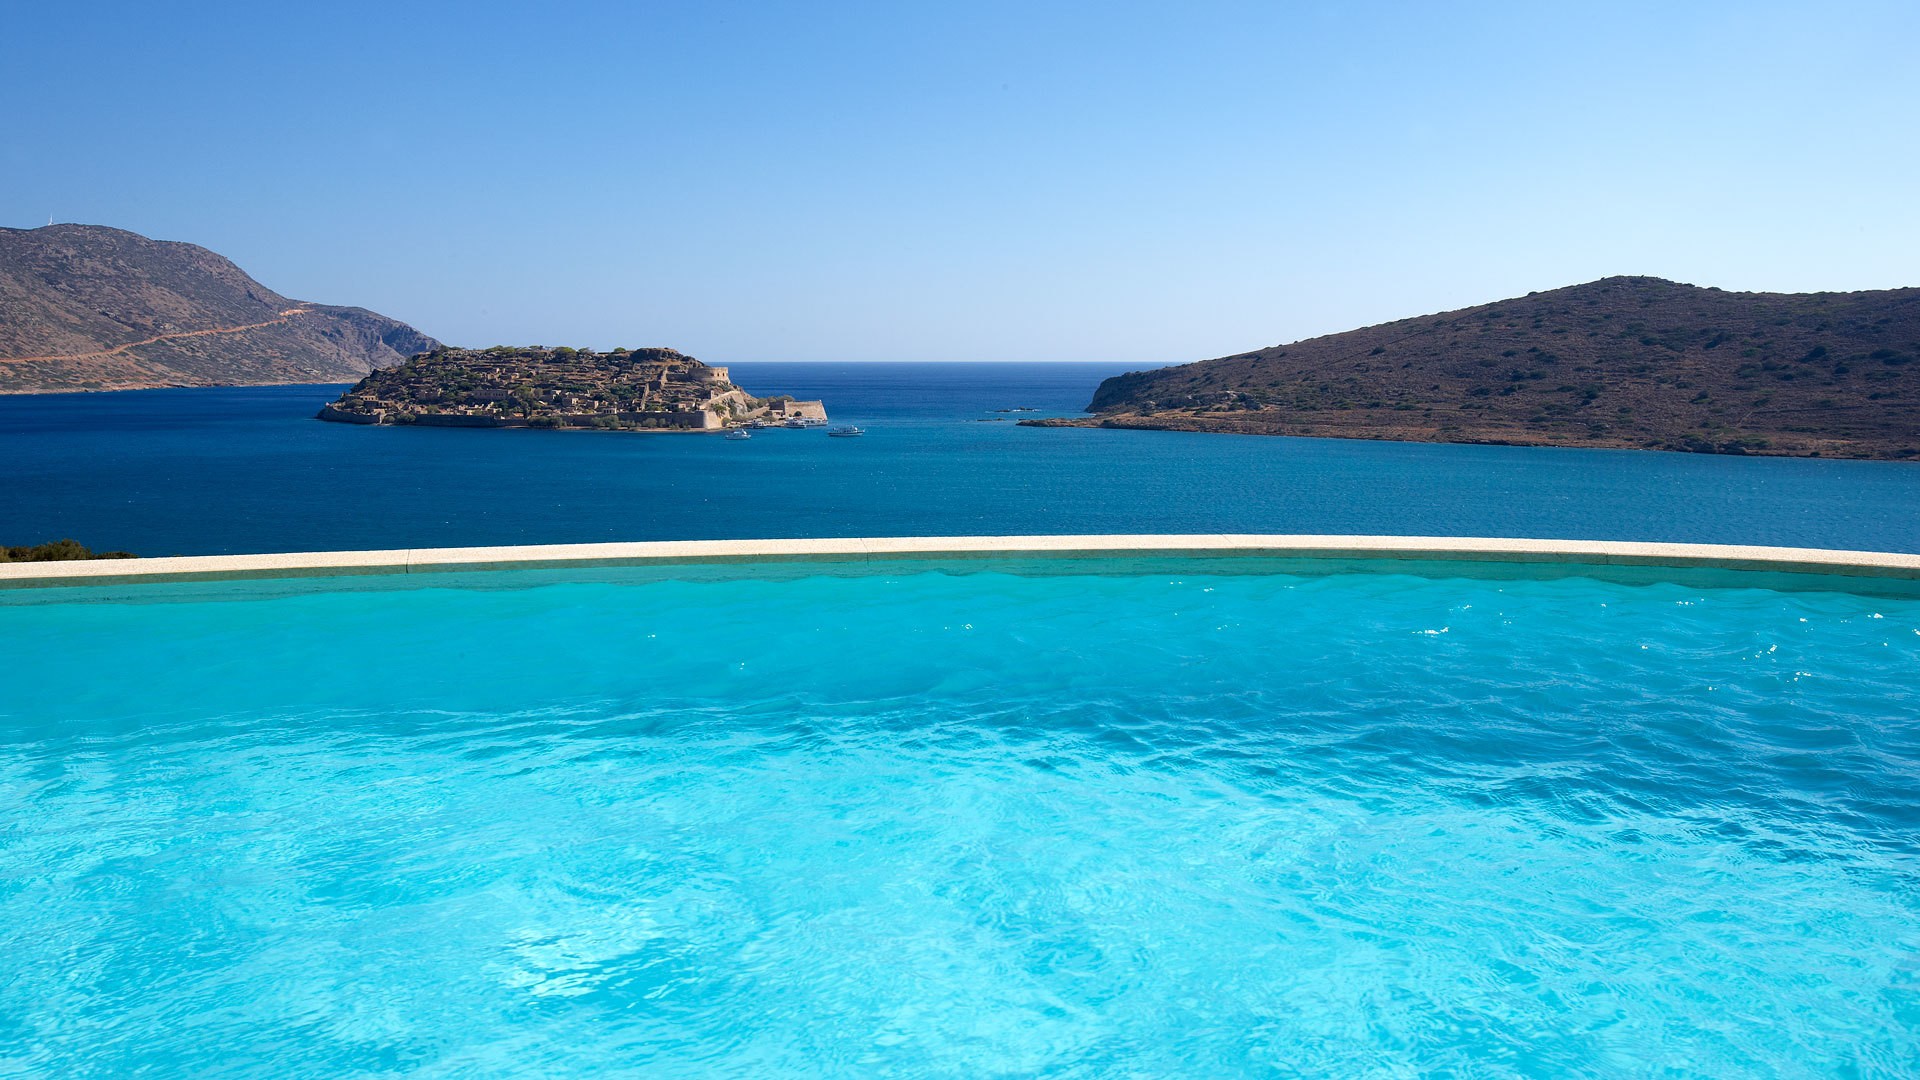 General 1920x1080 landscape swimming pool island sea Greece bay water sky horizon